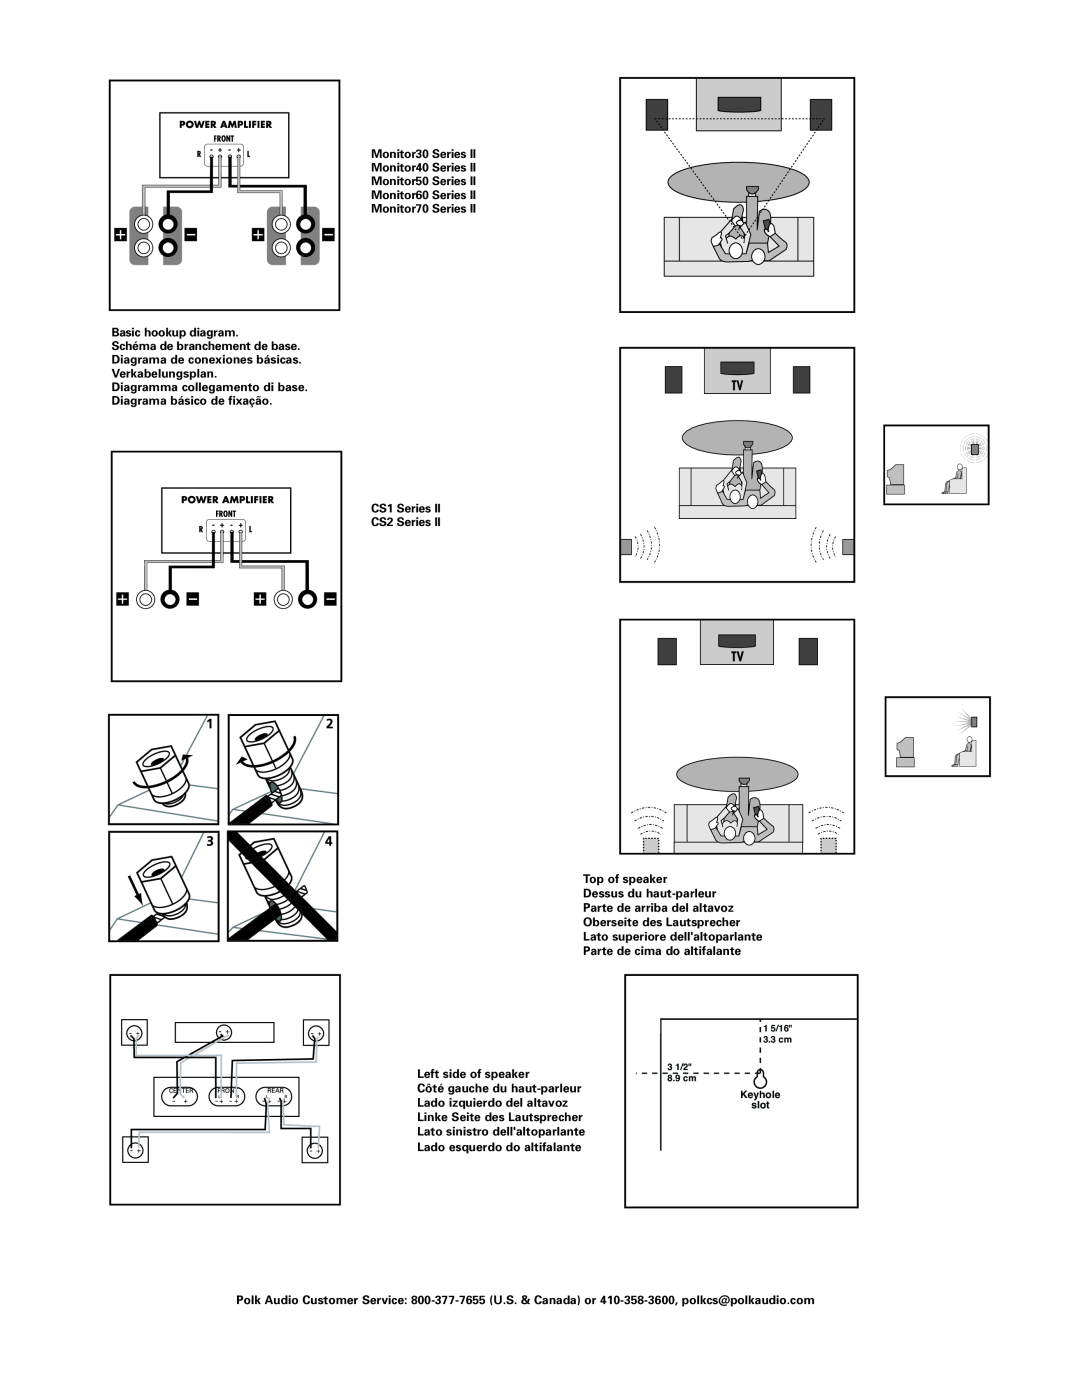 Polk Audio AM6095-B, AM4095-A owner manual Basic hookup diagram 